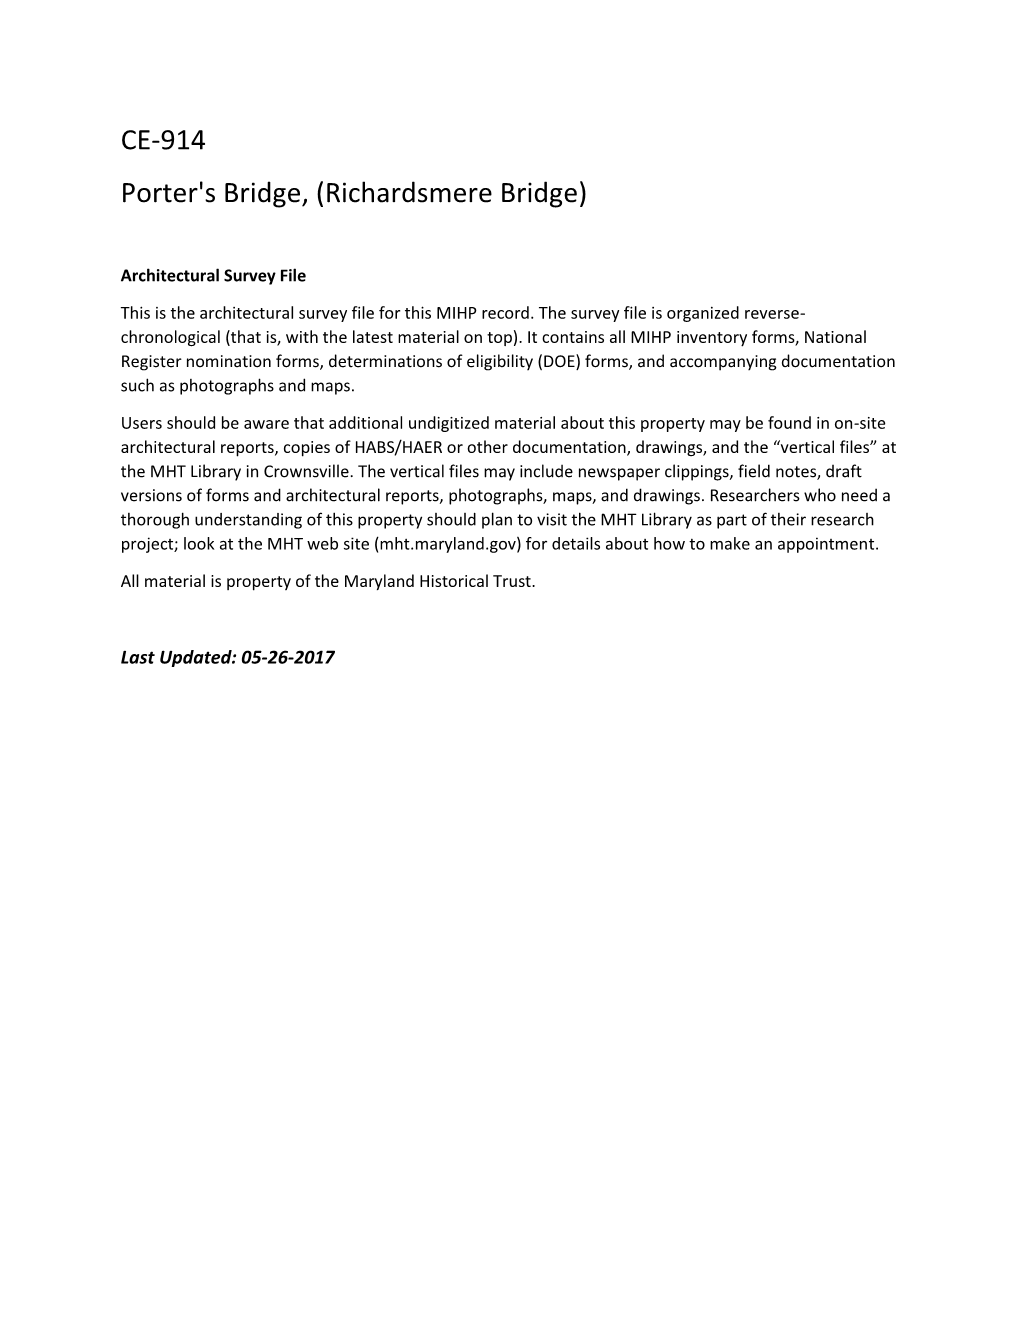 CE-914 Porter's Bridge, (Richardsmere Bridge)